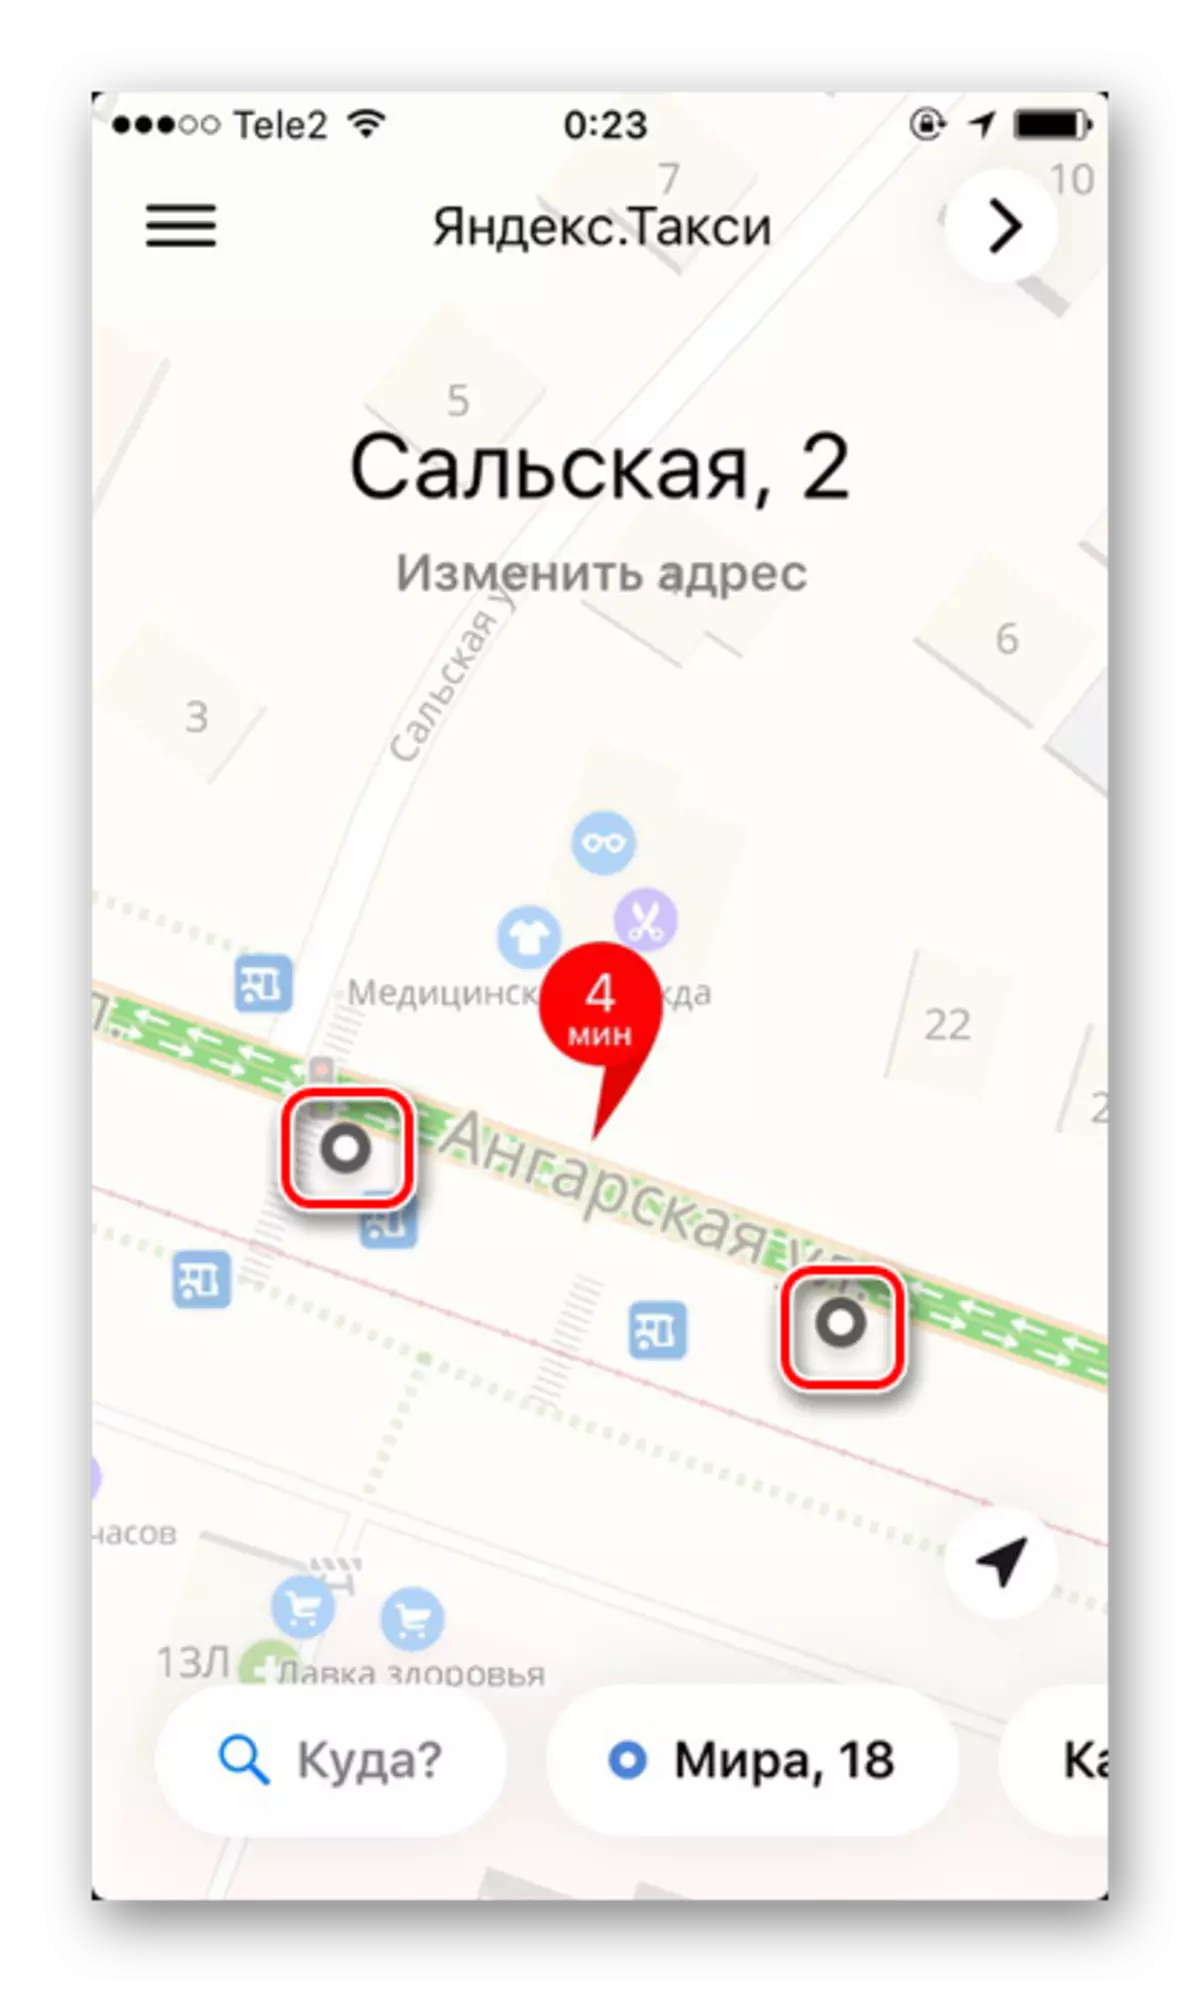 خەرىتىدىكى بەزى نۇقتىلار خەرىتىدىكى بەزى نۇقتىلار ئايفوندىكى Yandex.taxi قوللىنىشچان پروگراممىسىنىڭ باھاسىنى ئازايتىڭ